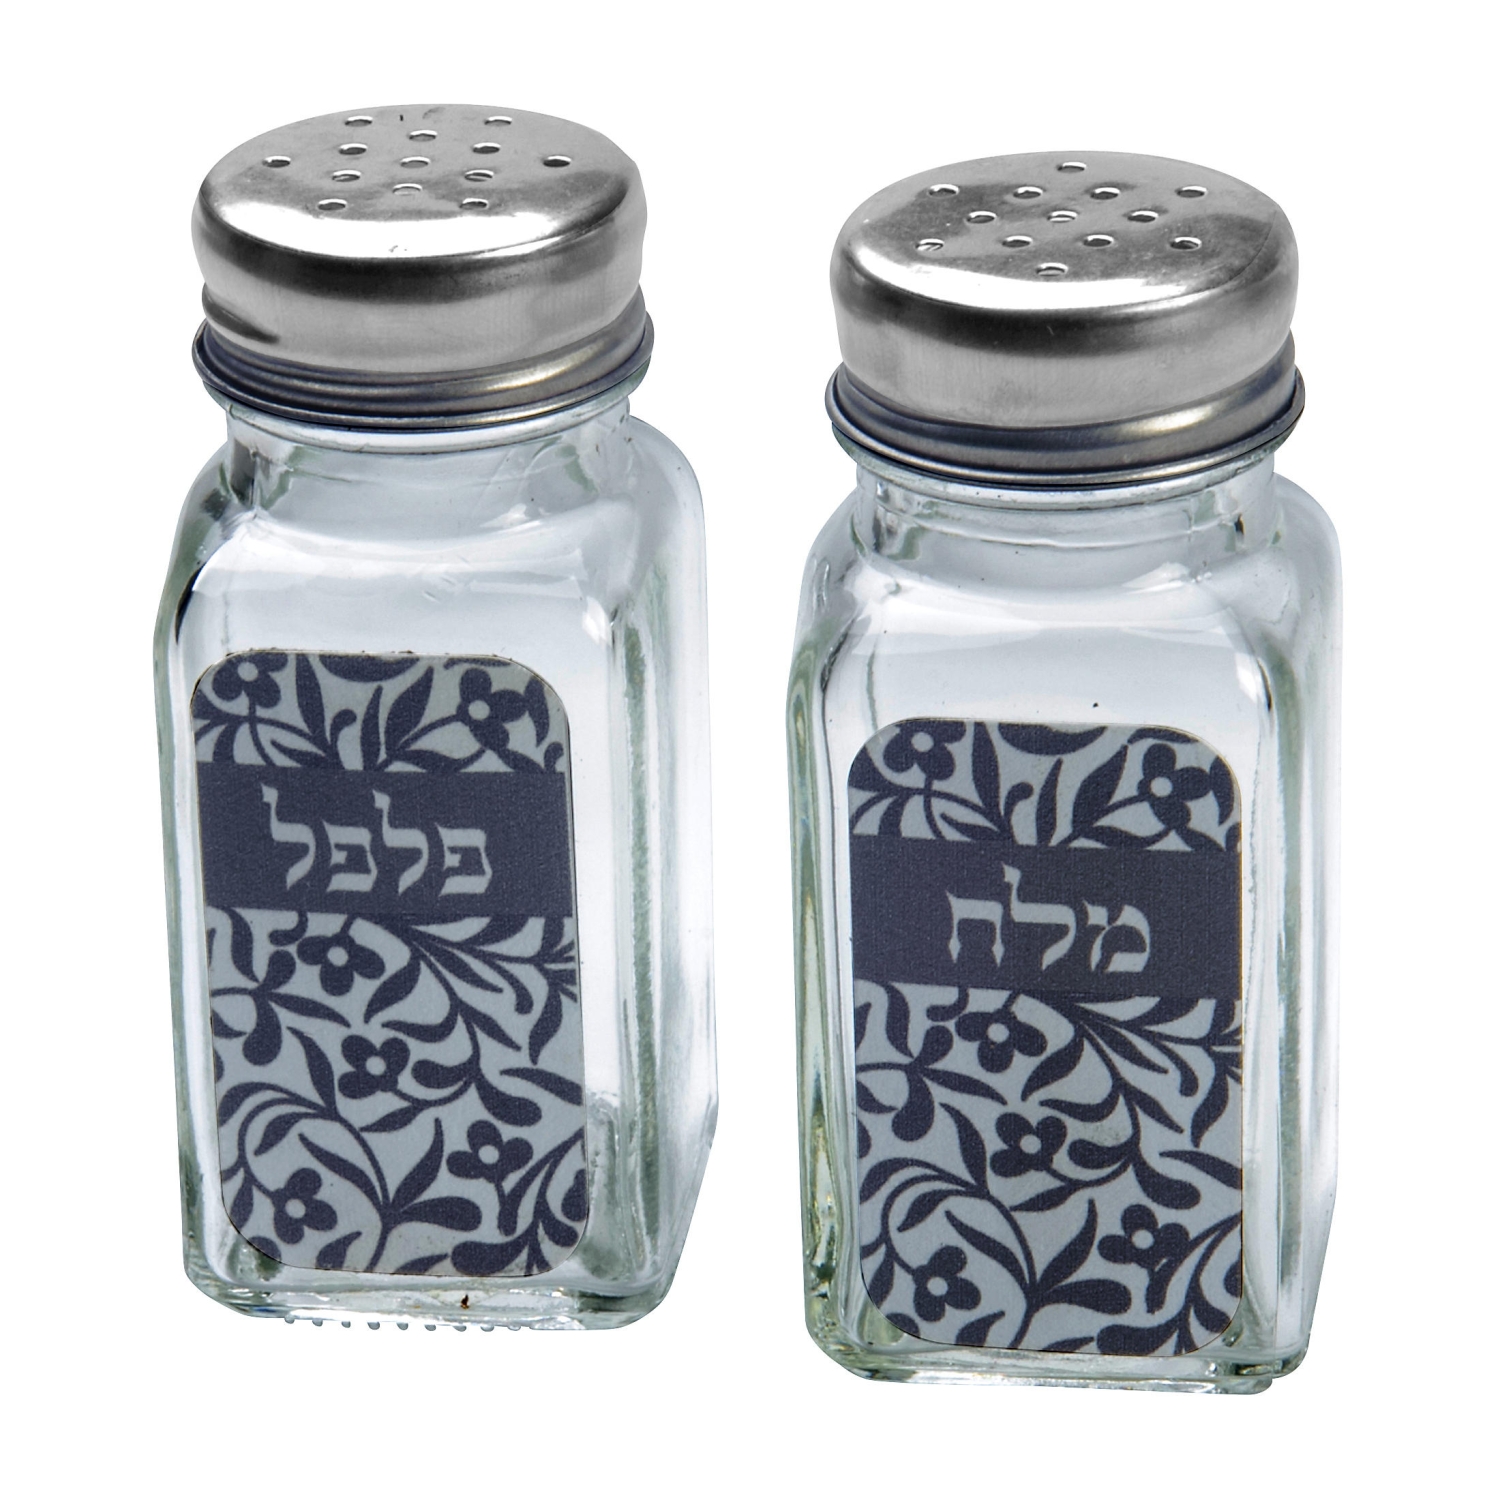 Dorit Judaica Salt and Pepper Set - Floral Print - 1